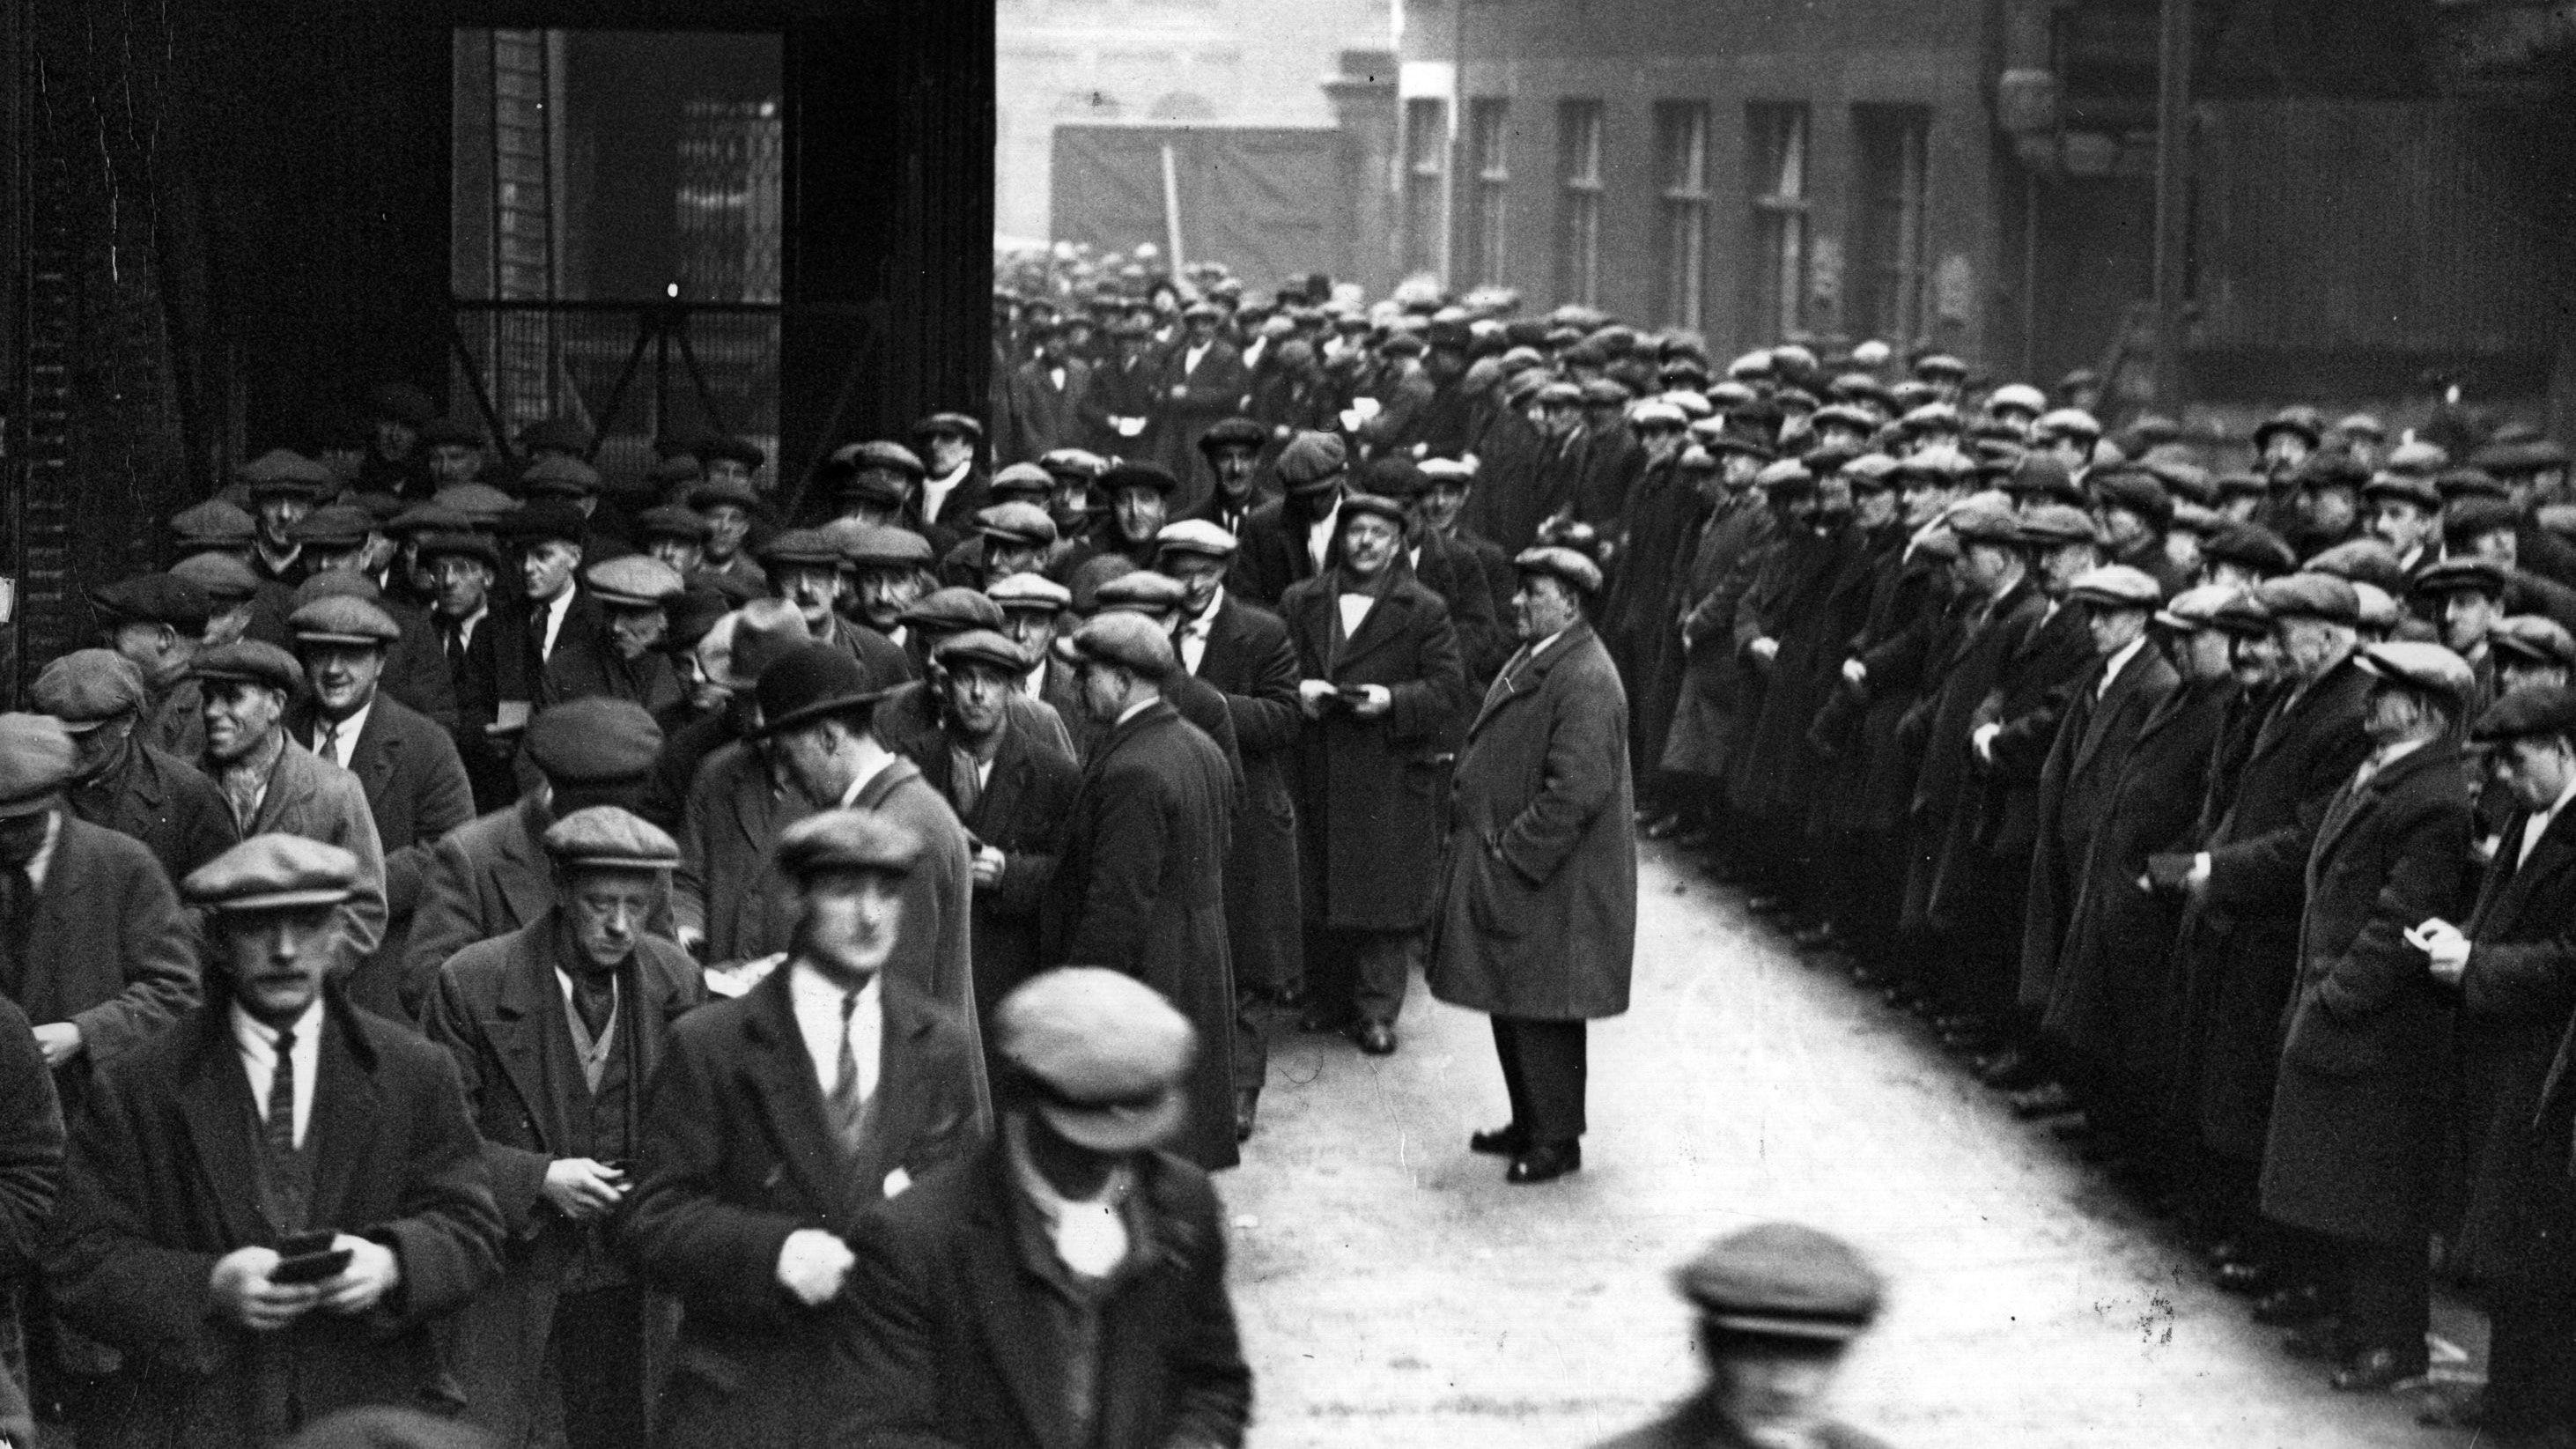 unemployment 1930s